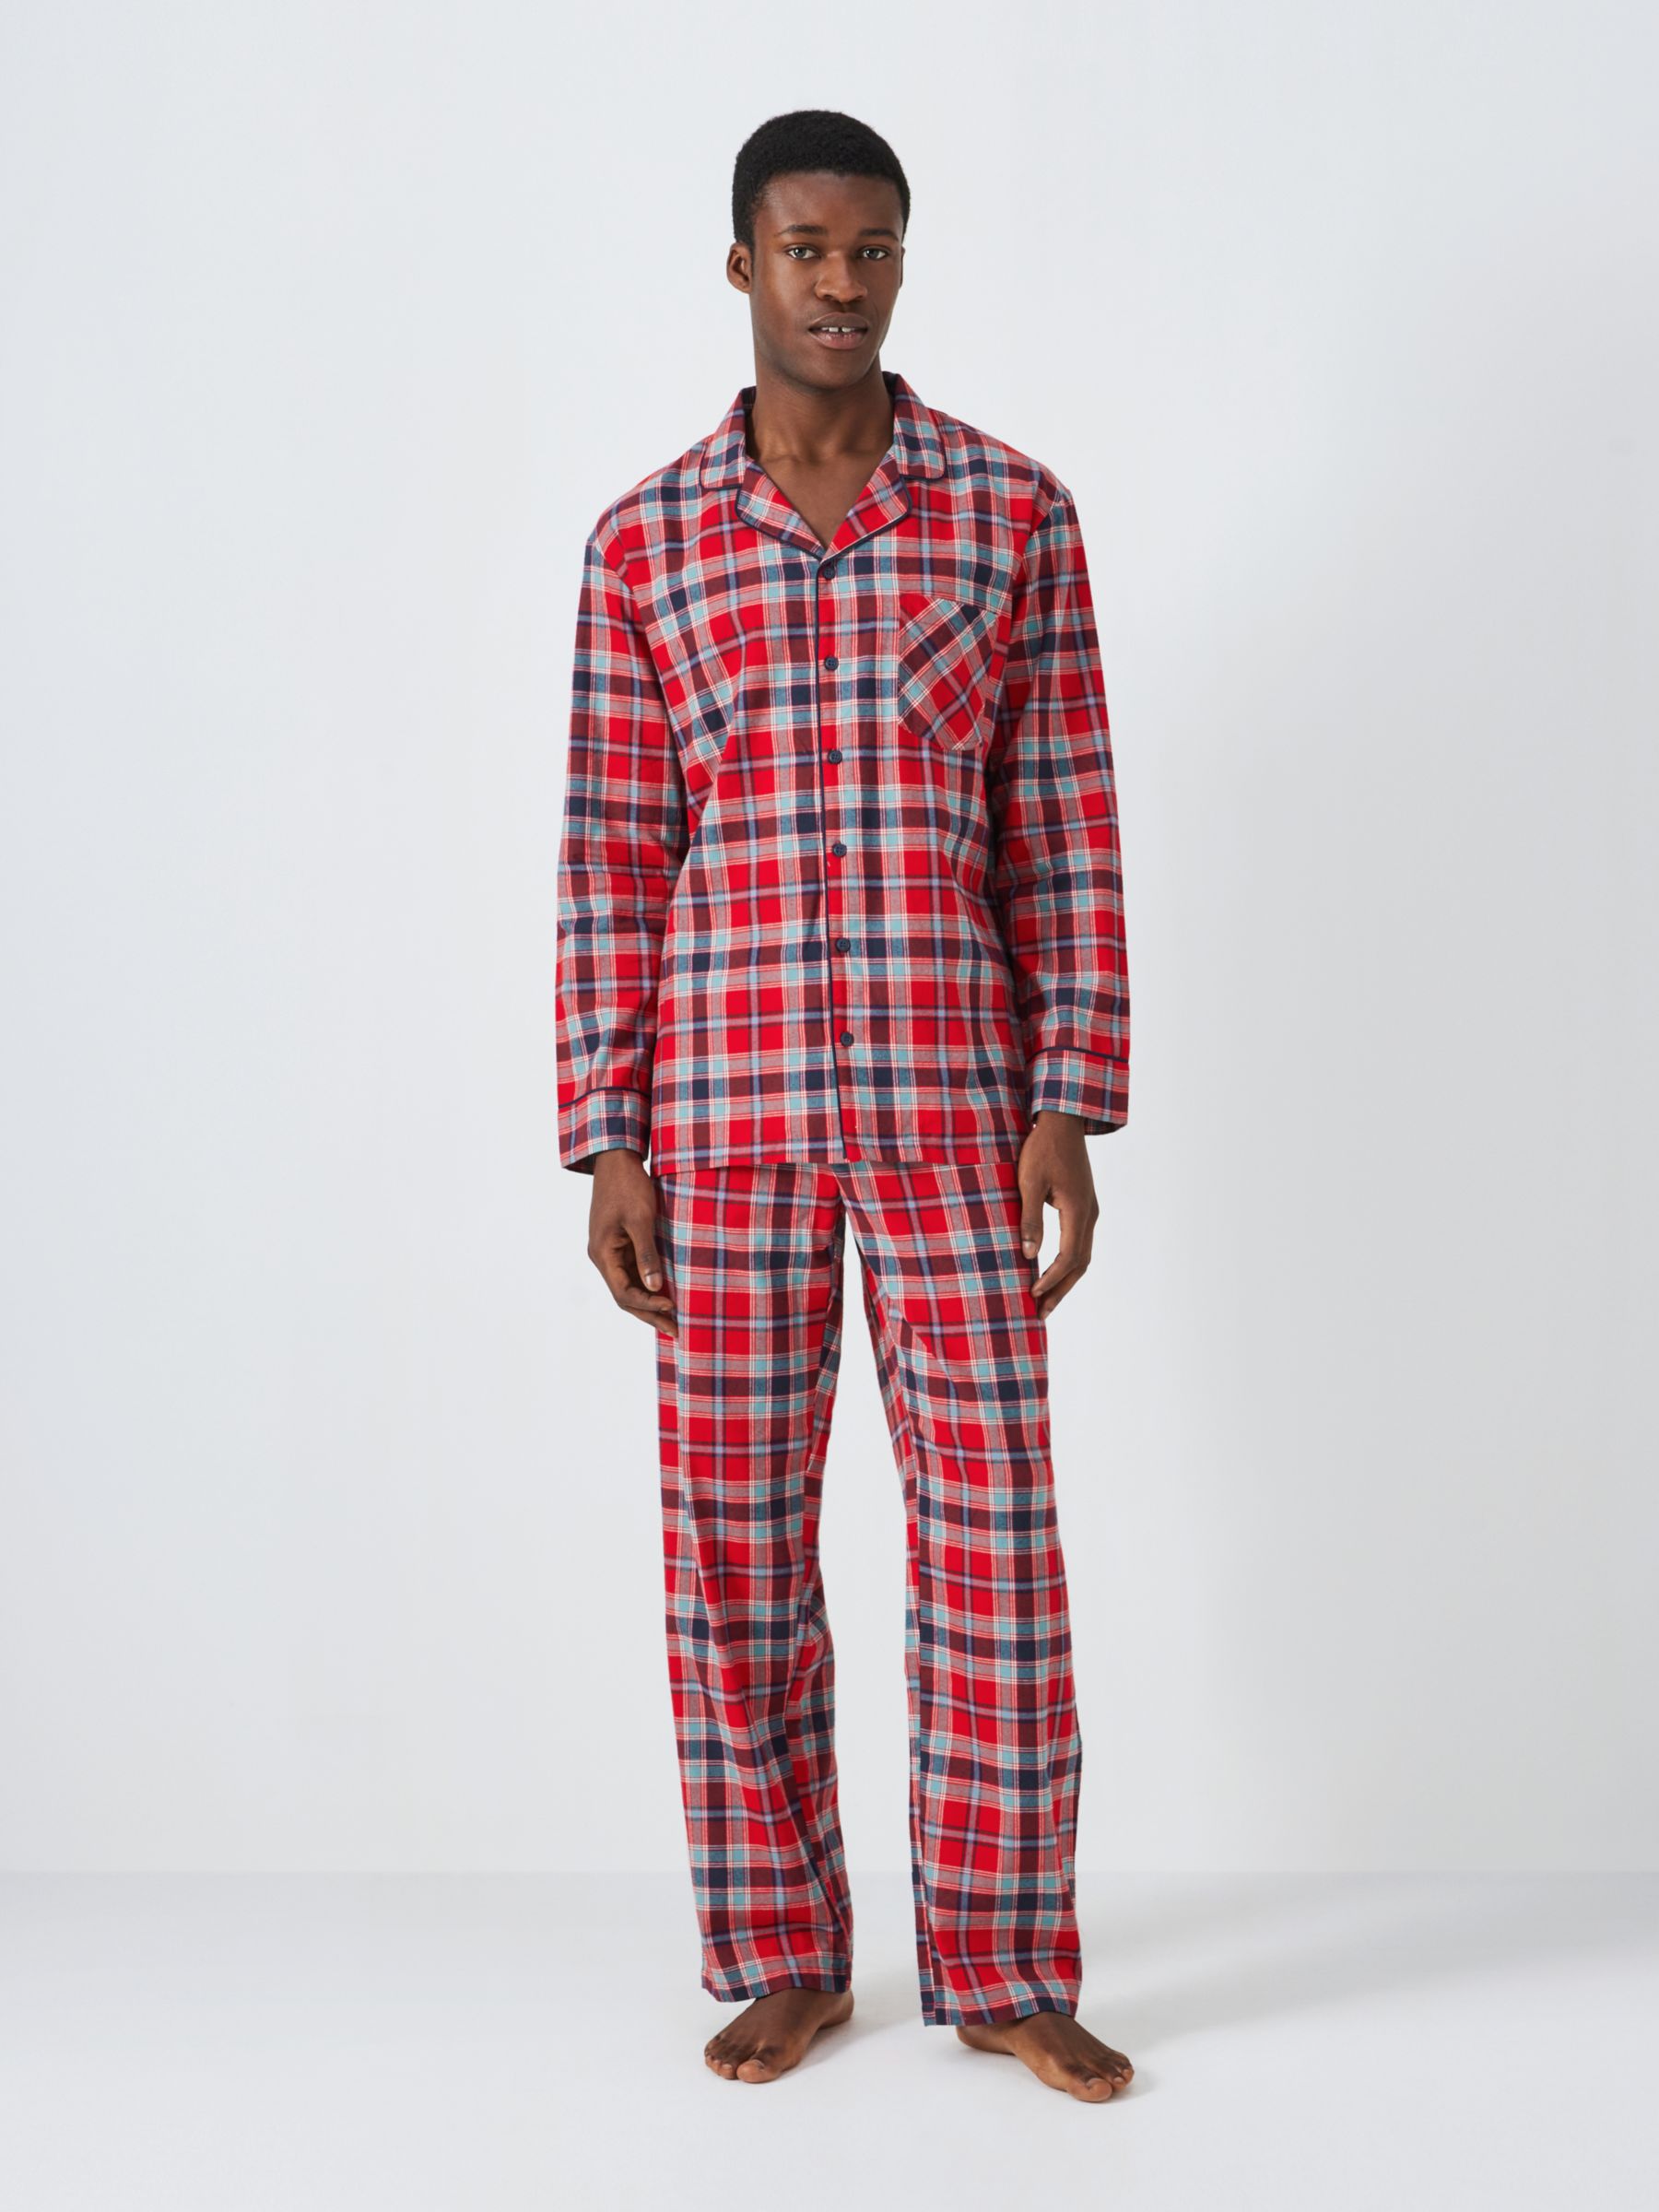 John Lewis Men's Family Cotton Check Pyjama Gift Set, Red, S